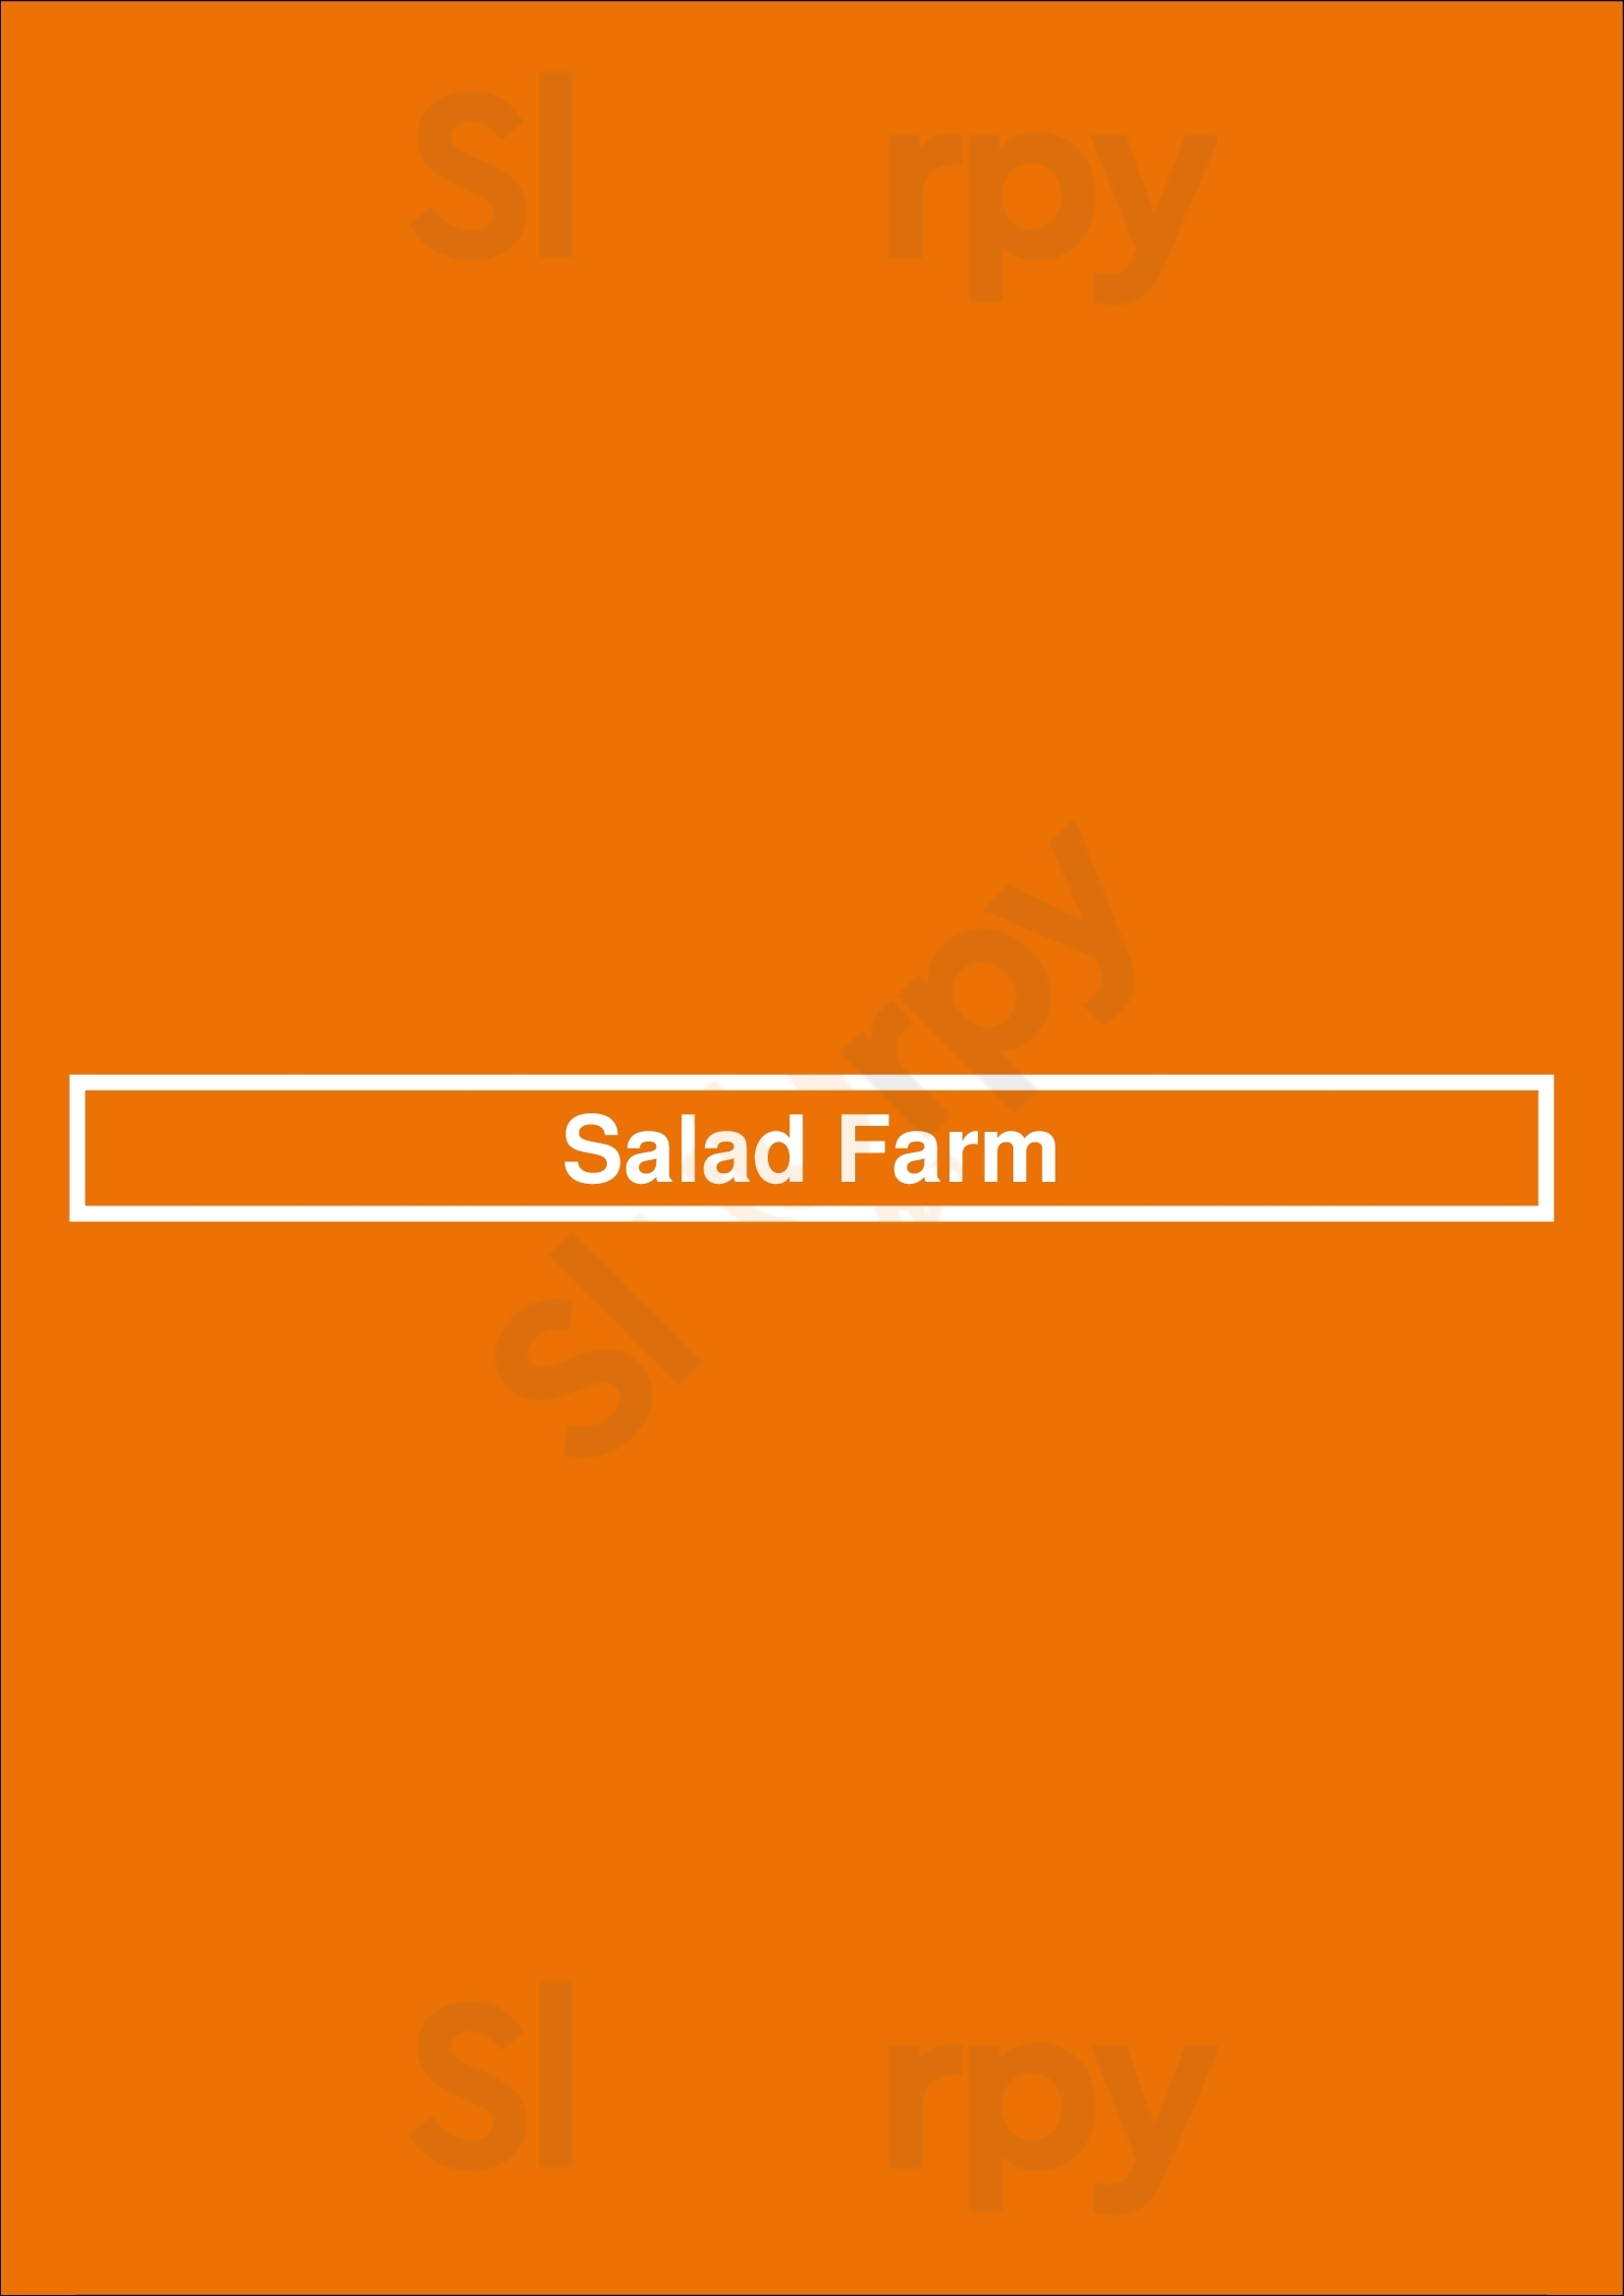 Salad Farm Los Angeles Menu - 1